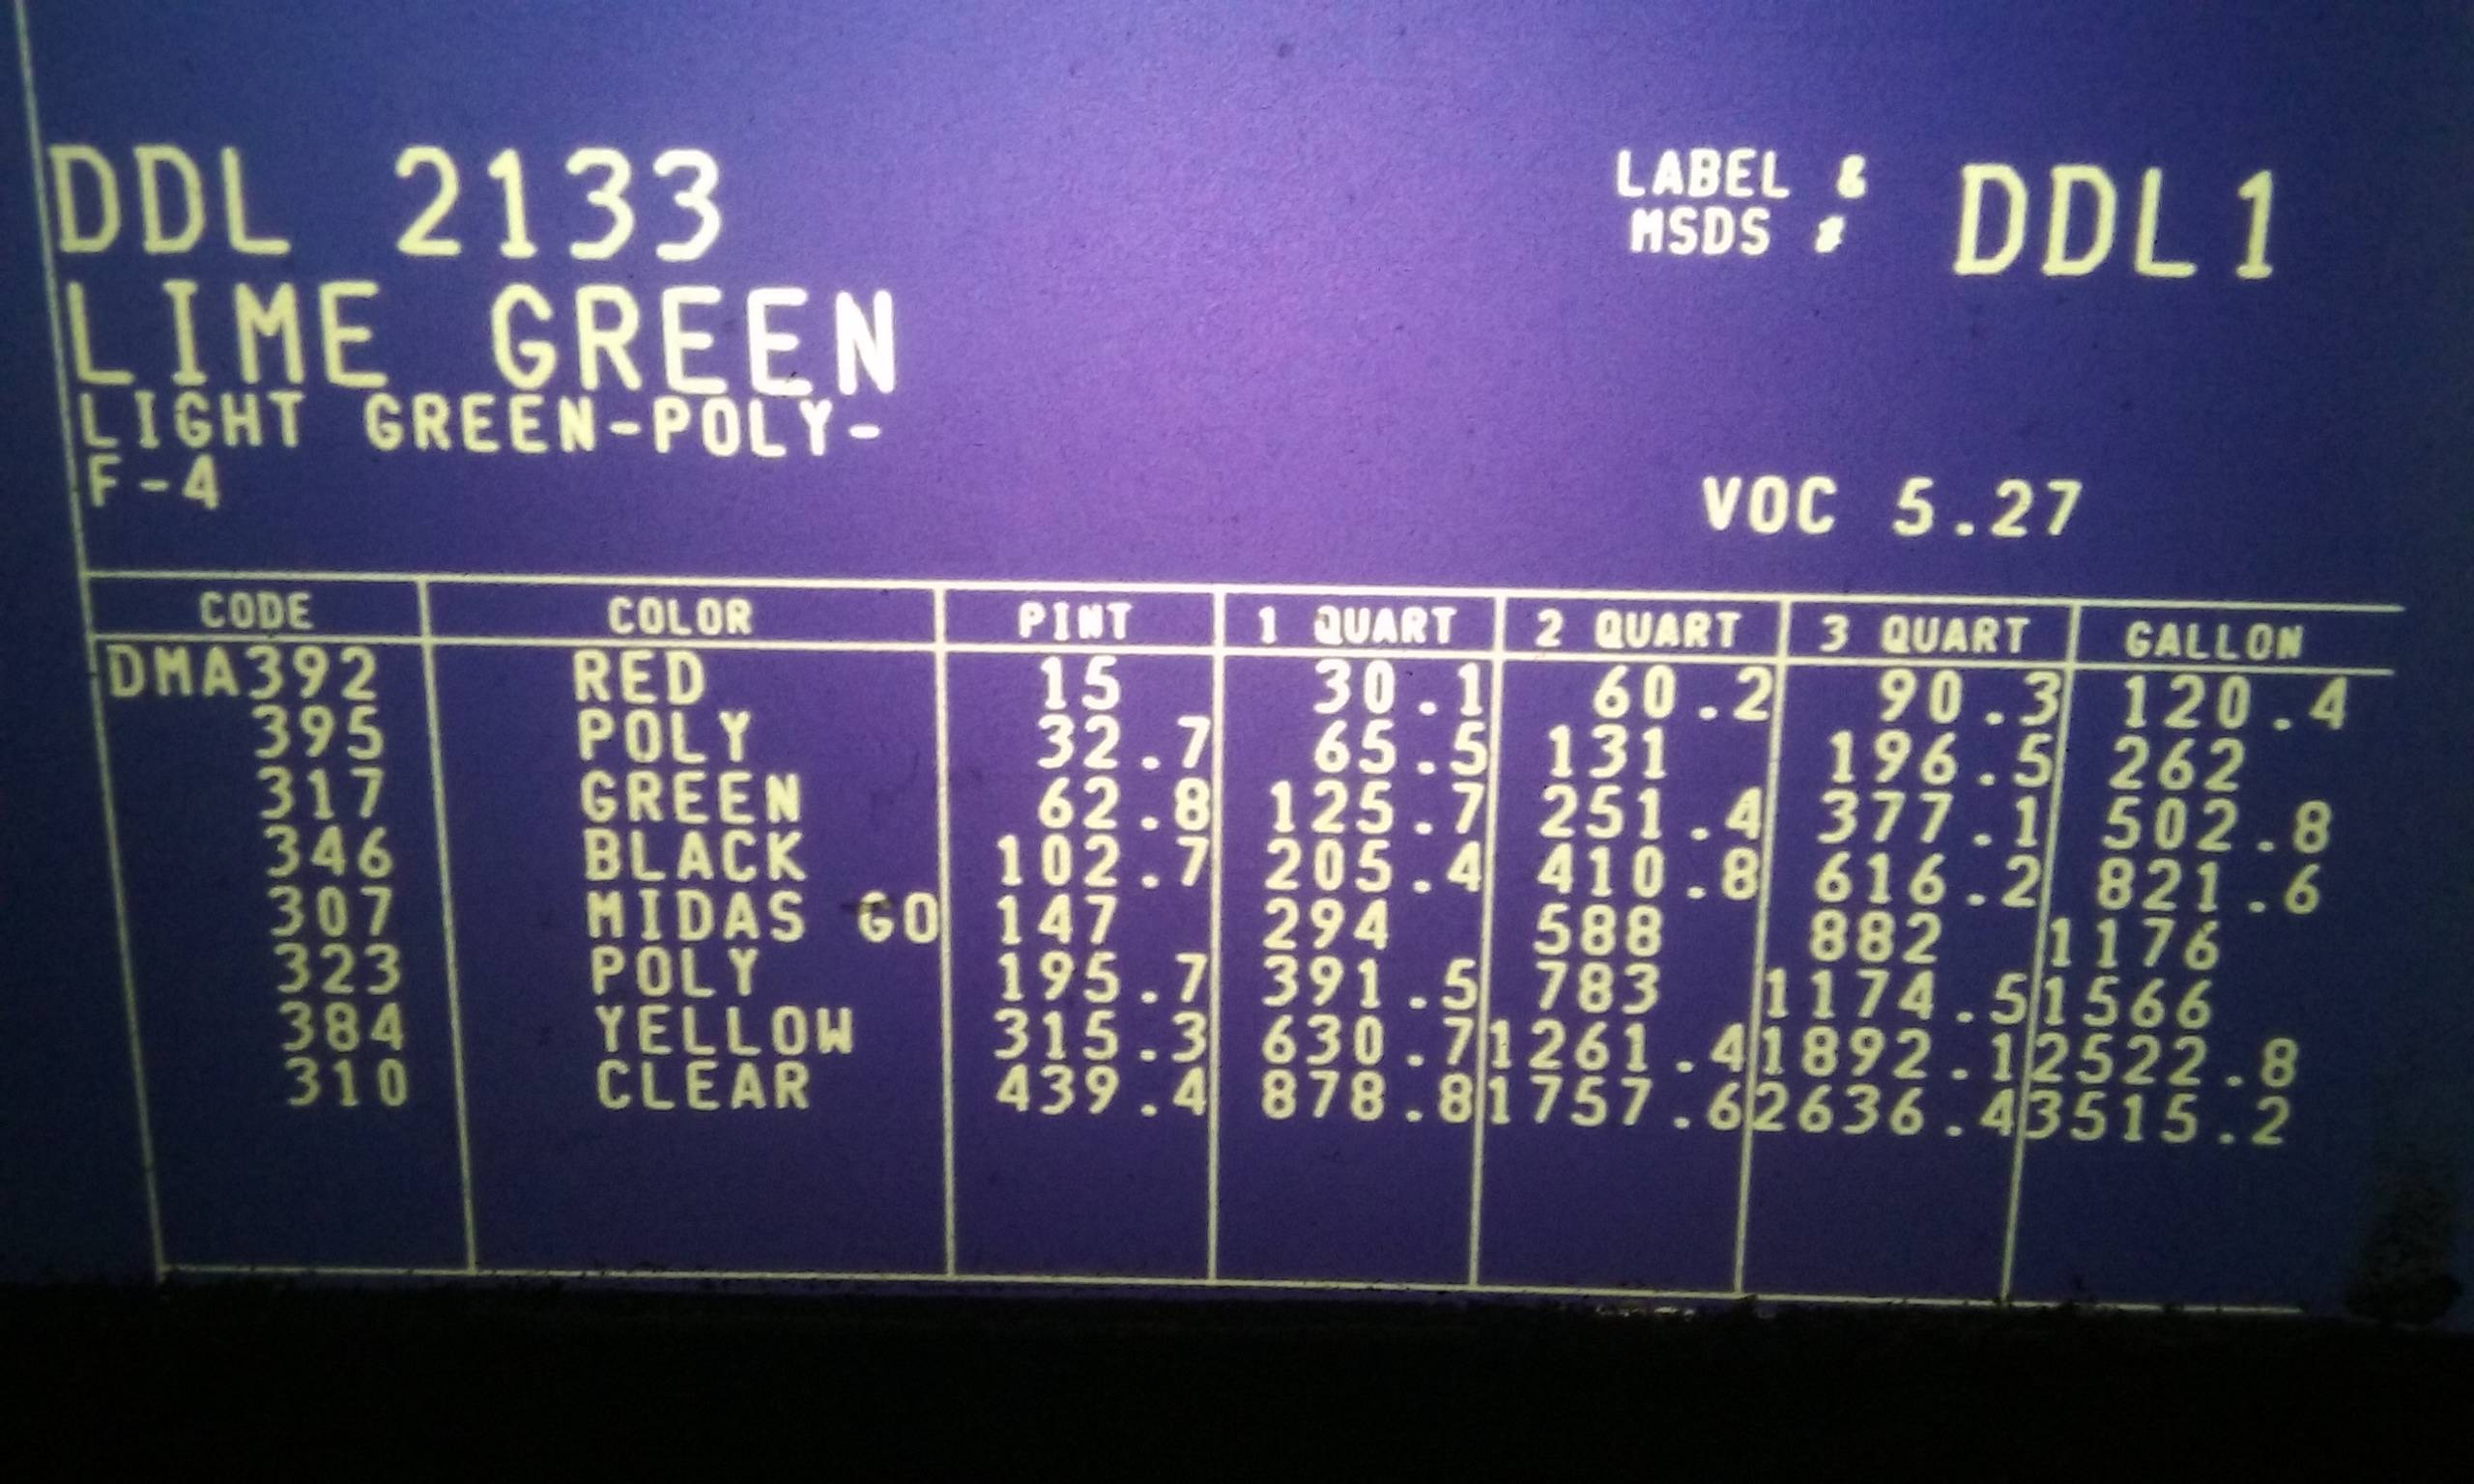 2133 DDL LIME GREEN F4.jpg